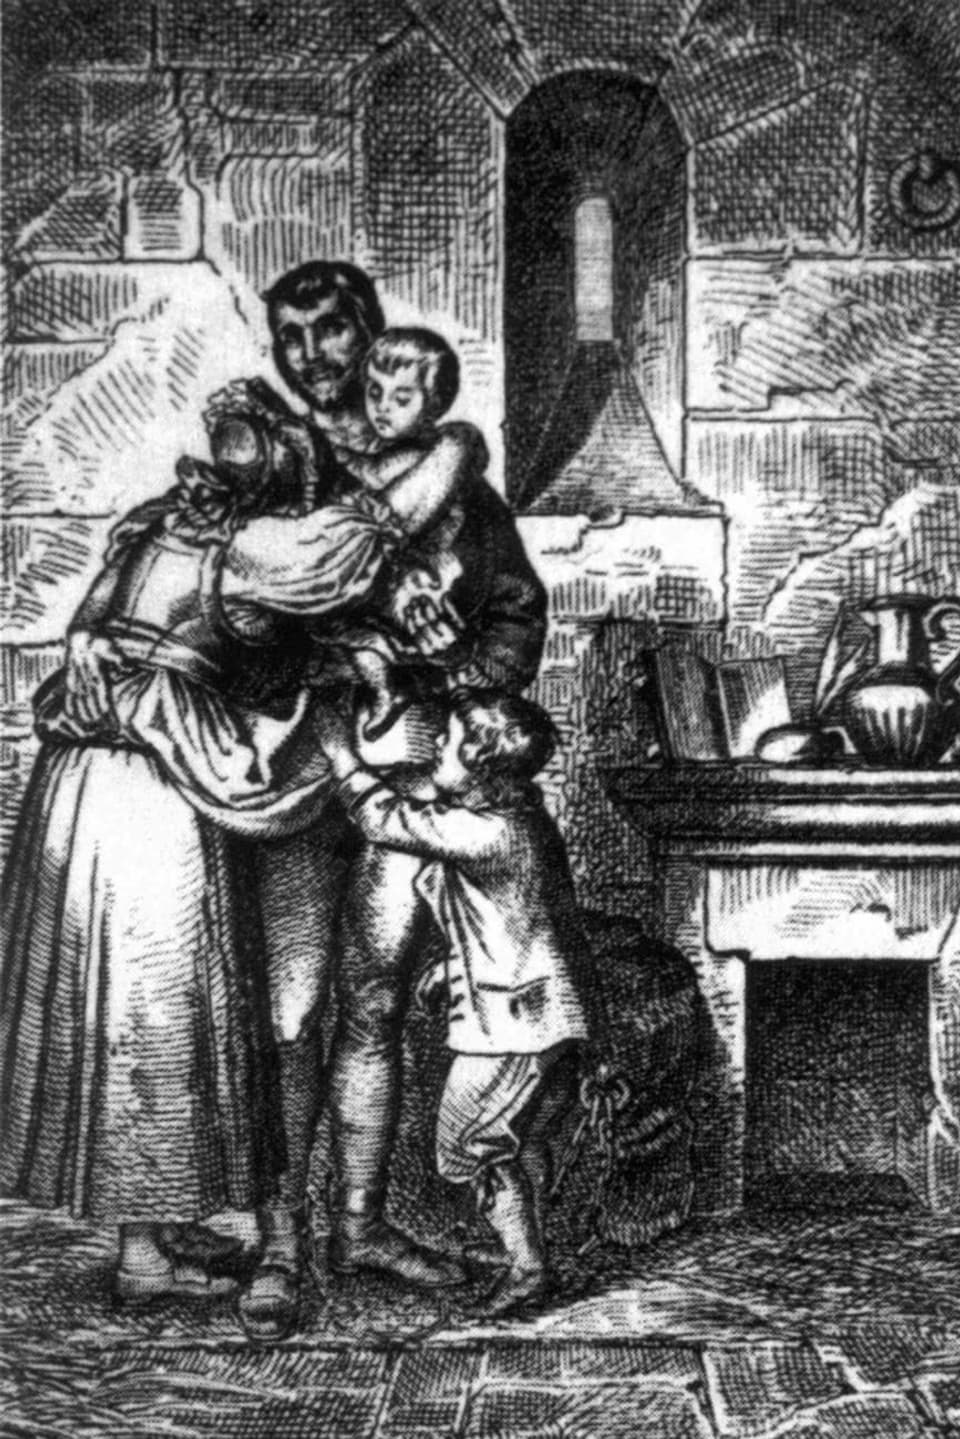 Schwarzweiss-Szene, Frau und zwei Kinder umarmen Mann